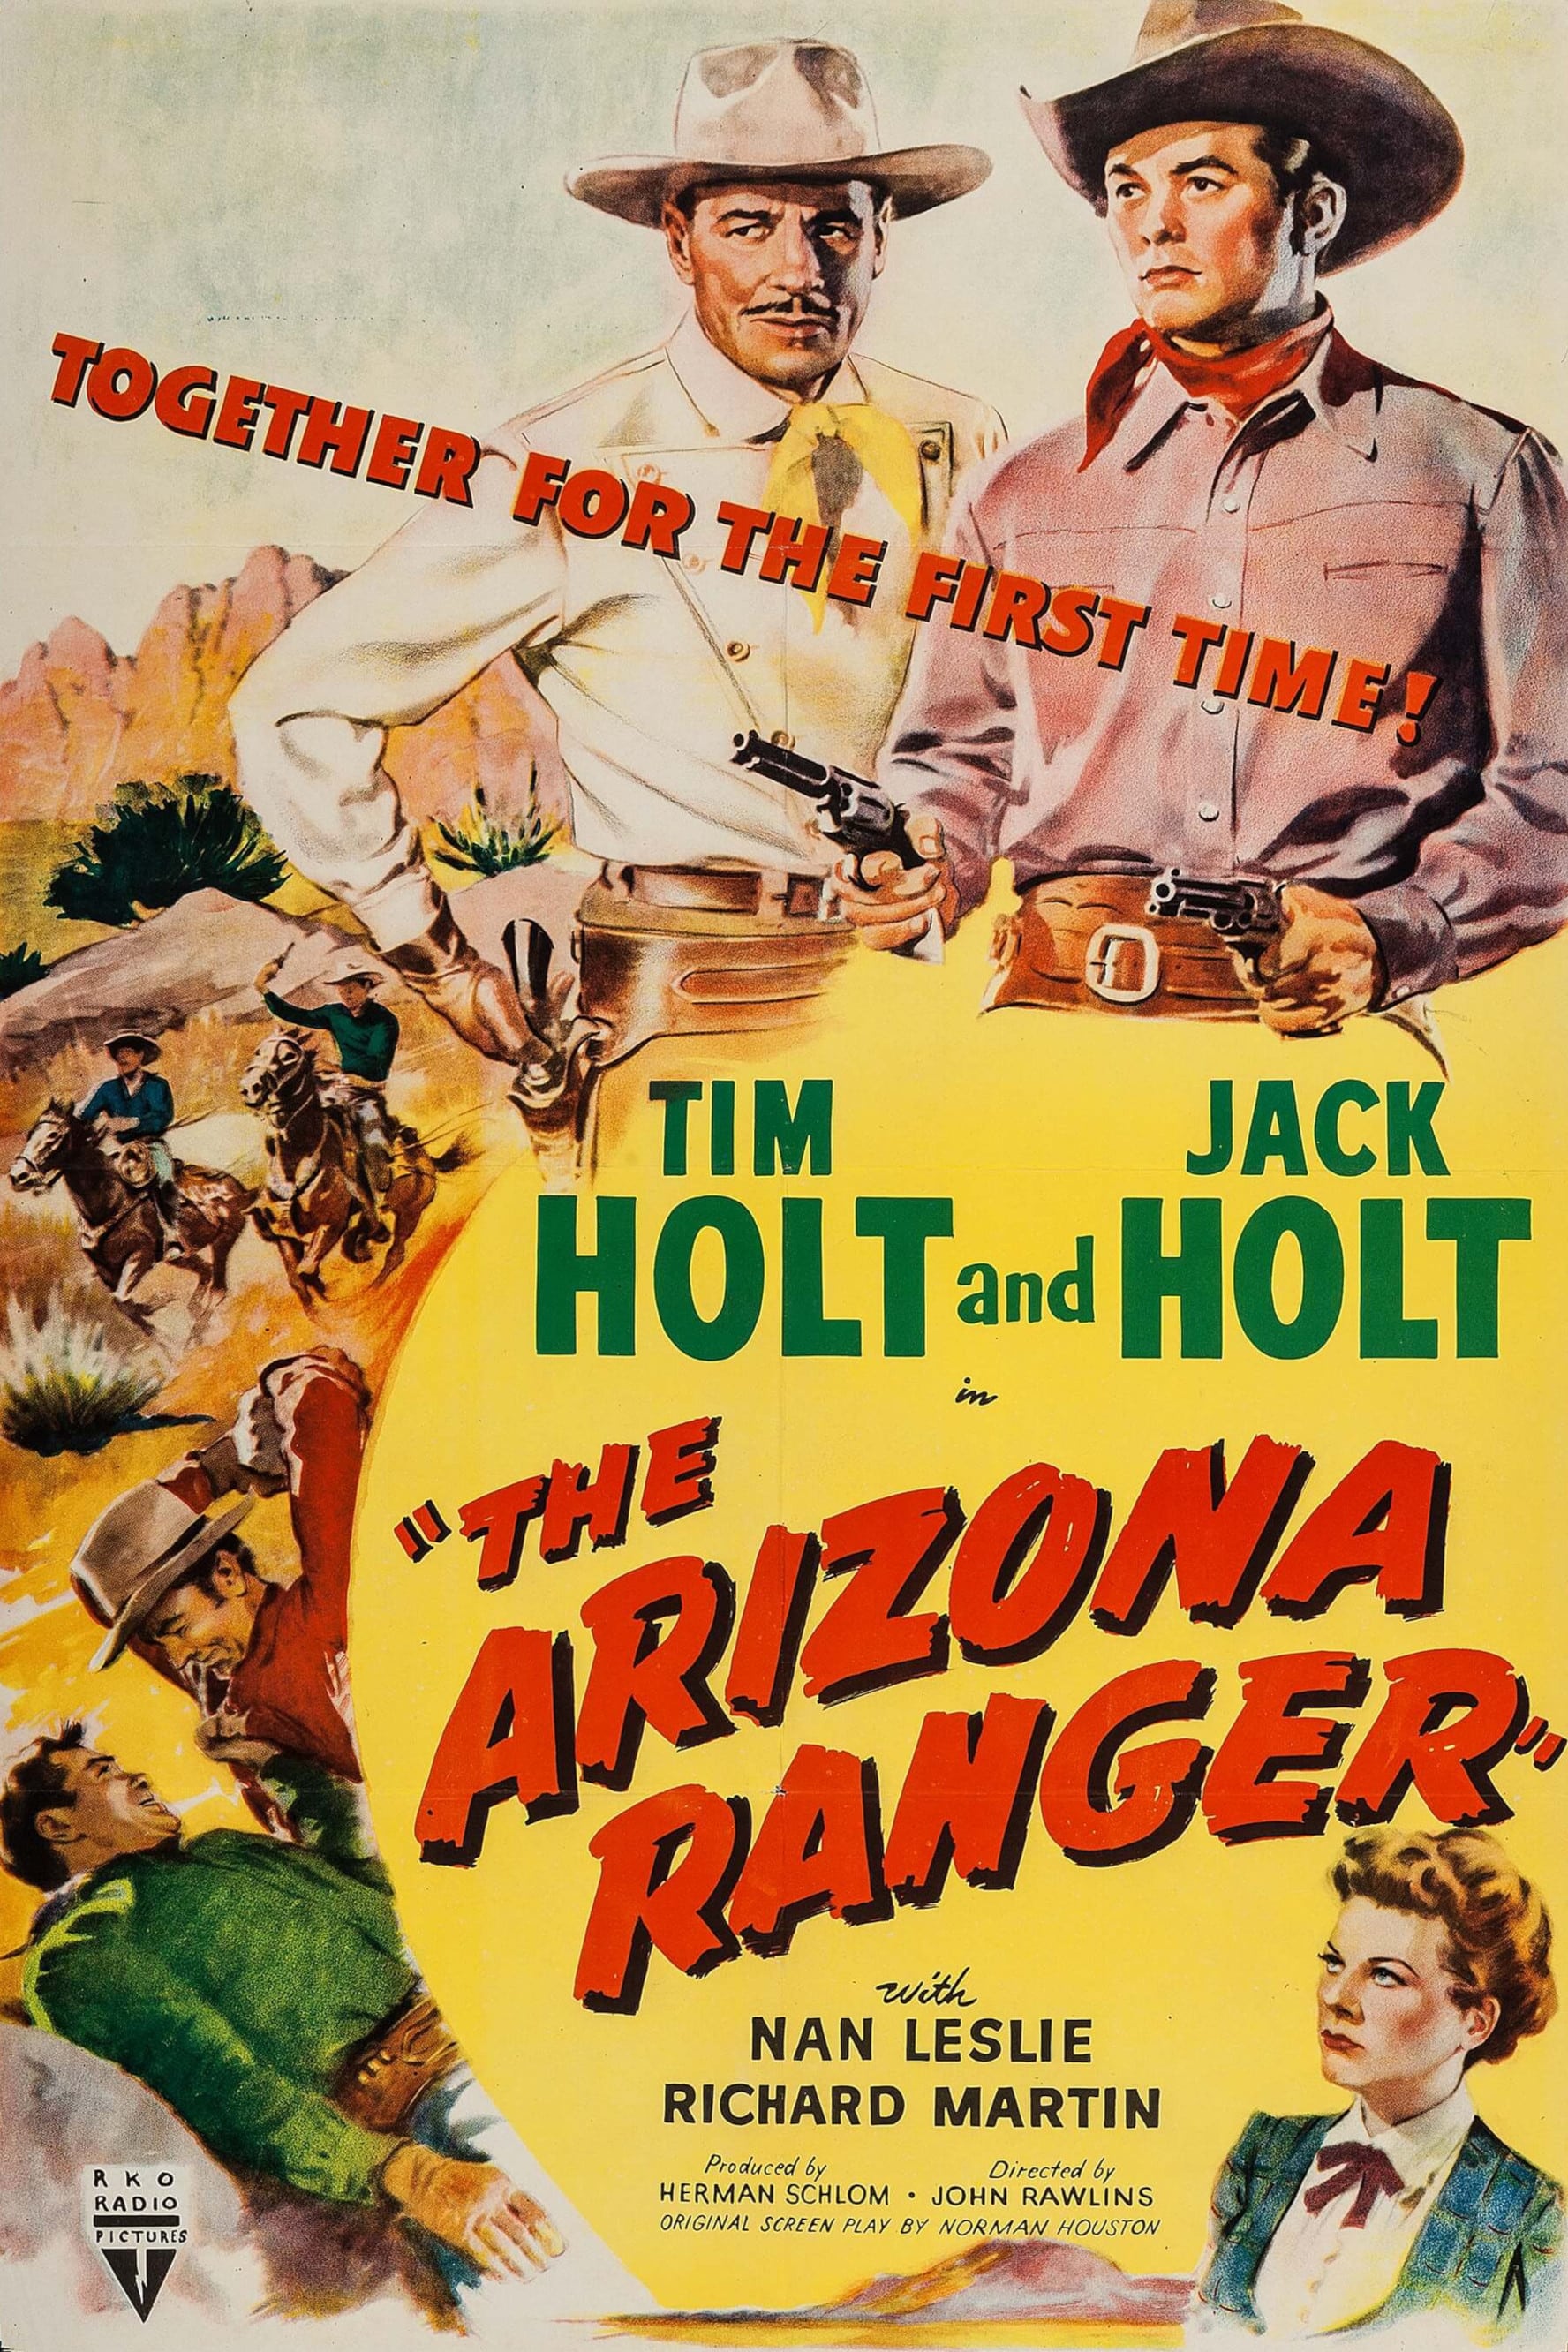 The Arizona Ranger (1948)